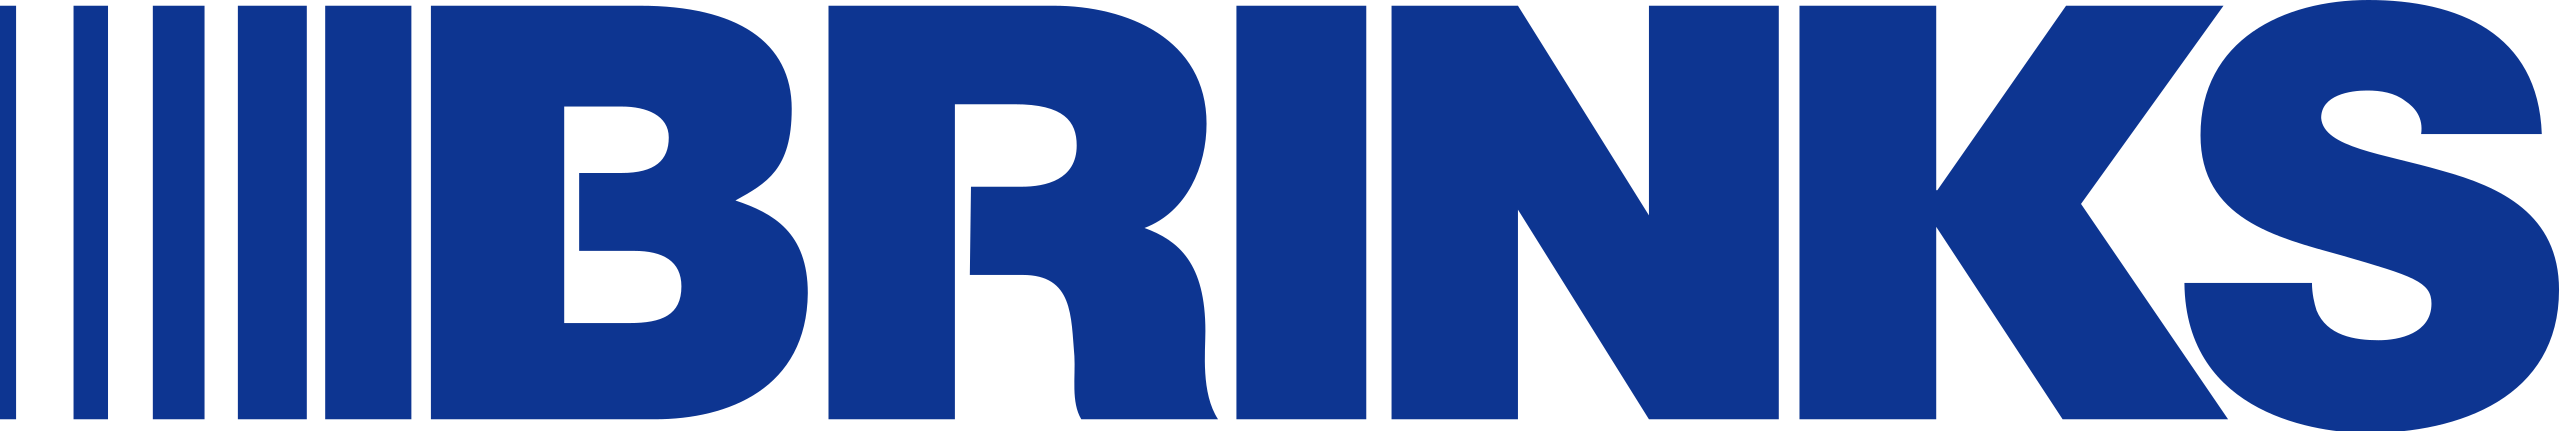 BRINKS logo commbox